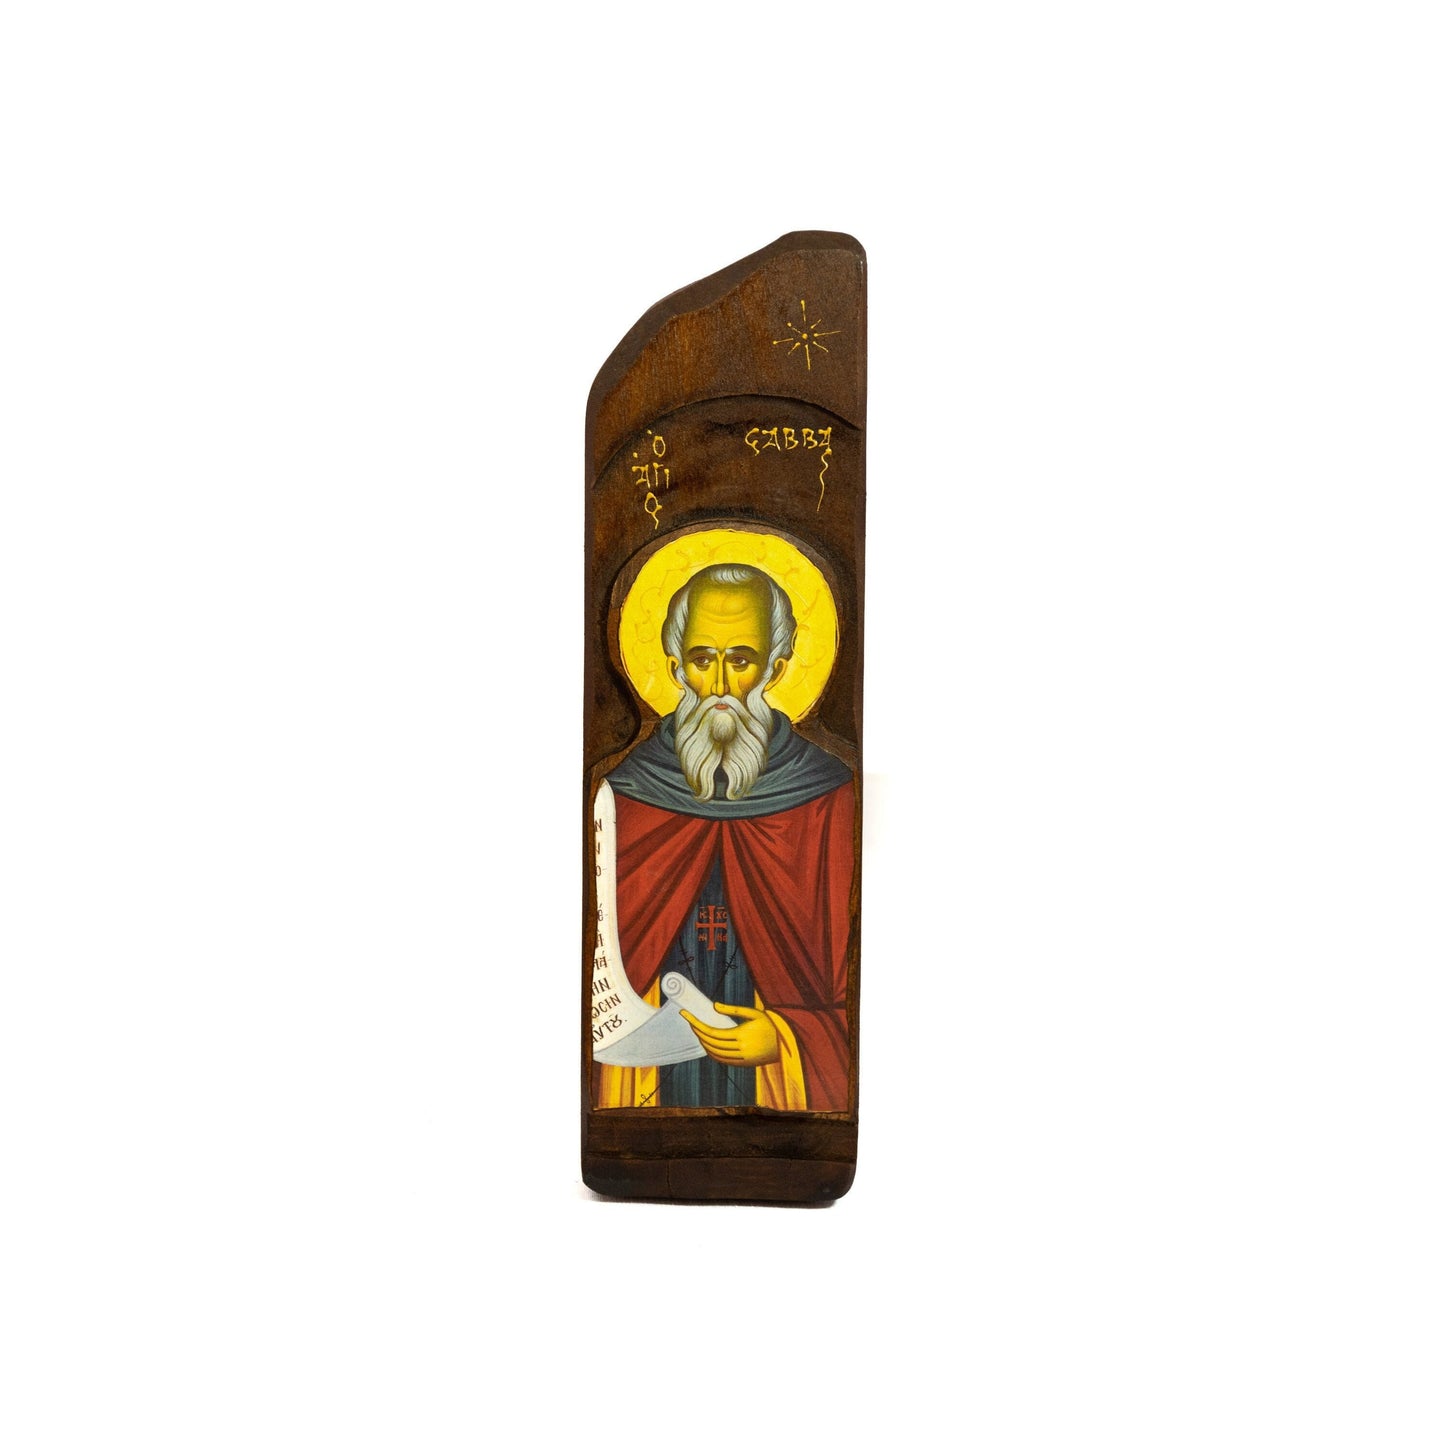 Saint Savvas icon, Handmade Greek Orthodox icon of St Savvas the Sanctified, Byzantine art wall hanging on wood plaque, religious home decor TheHolyArt